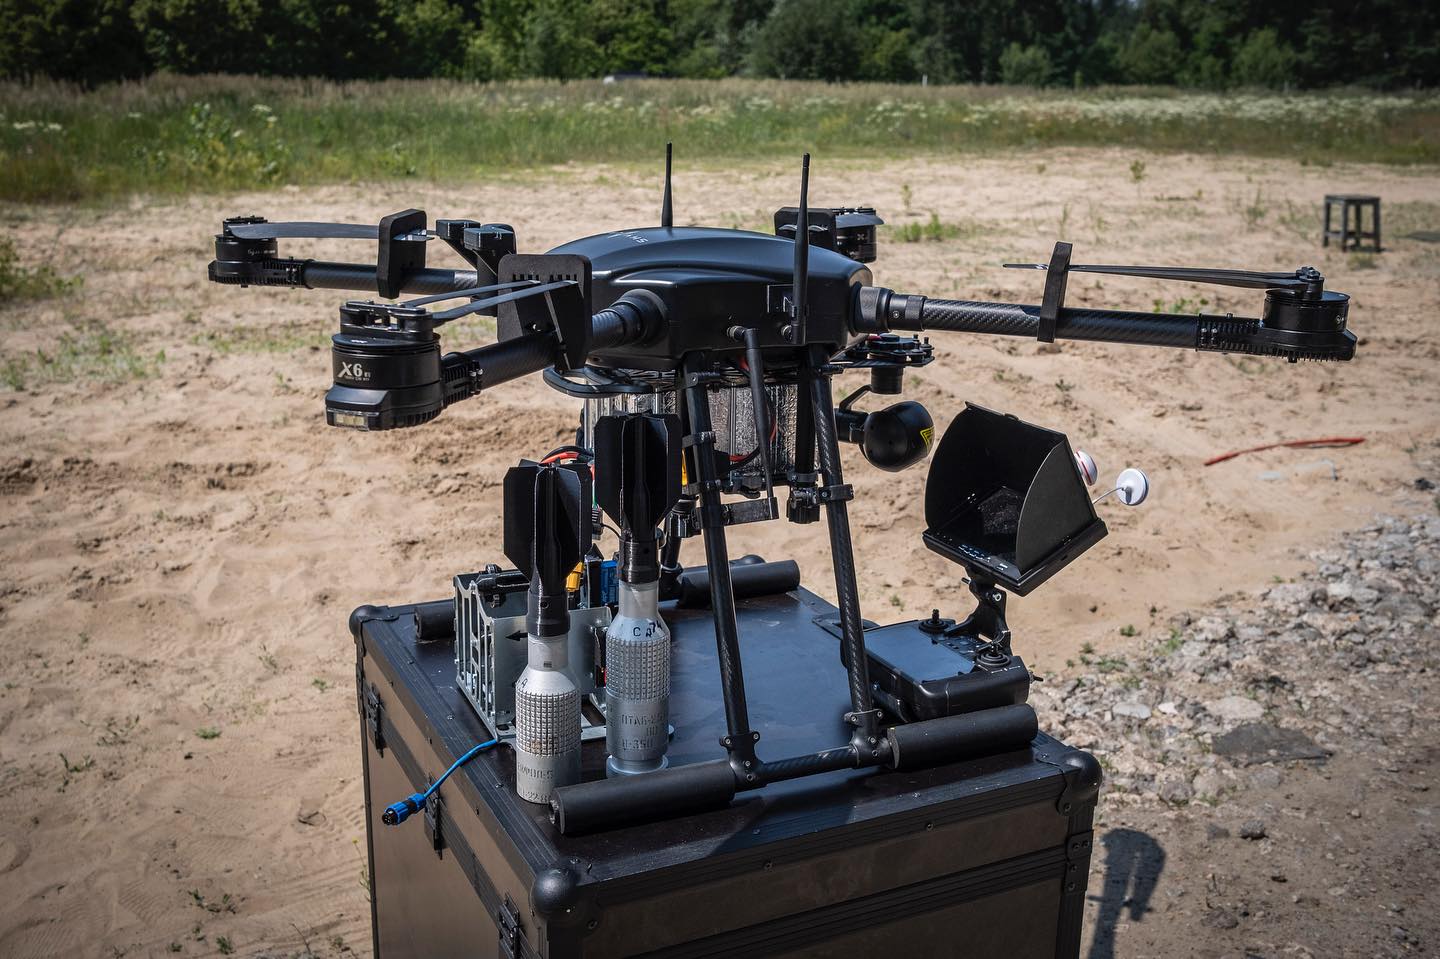 Ukrainian company SkyLab has introduced Shoolika mk6 drone, which is resistant to electronic warfare